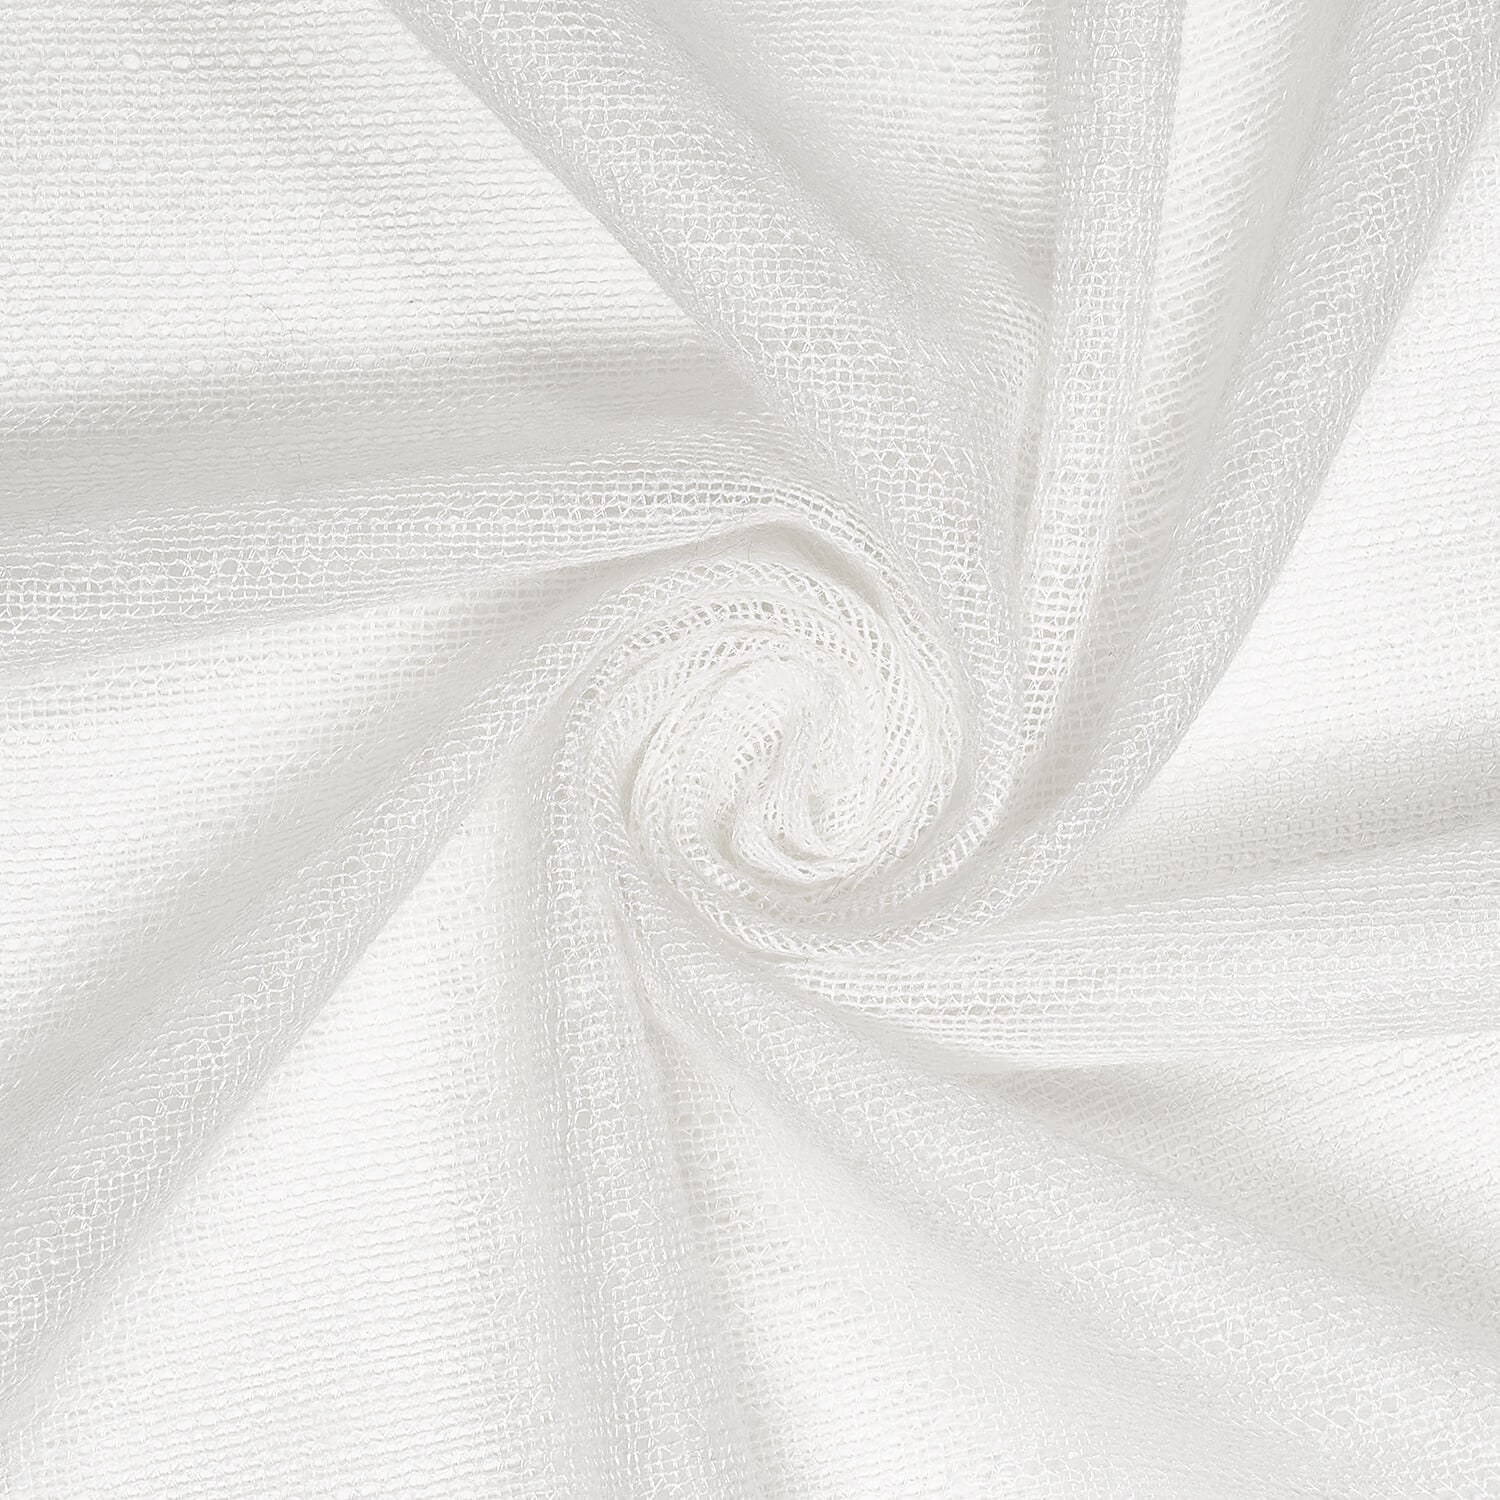 Fusible Web Bondaweb White Fuse-a-web Lightweight Interfacing Iron on  Adhesive Appliqué Fabric Priced per Half Metre 